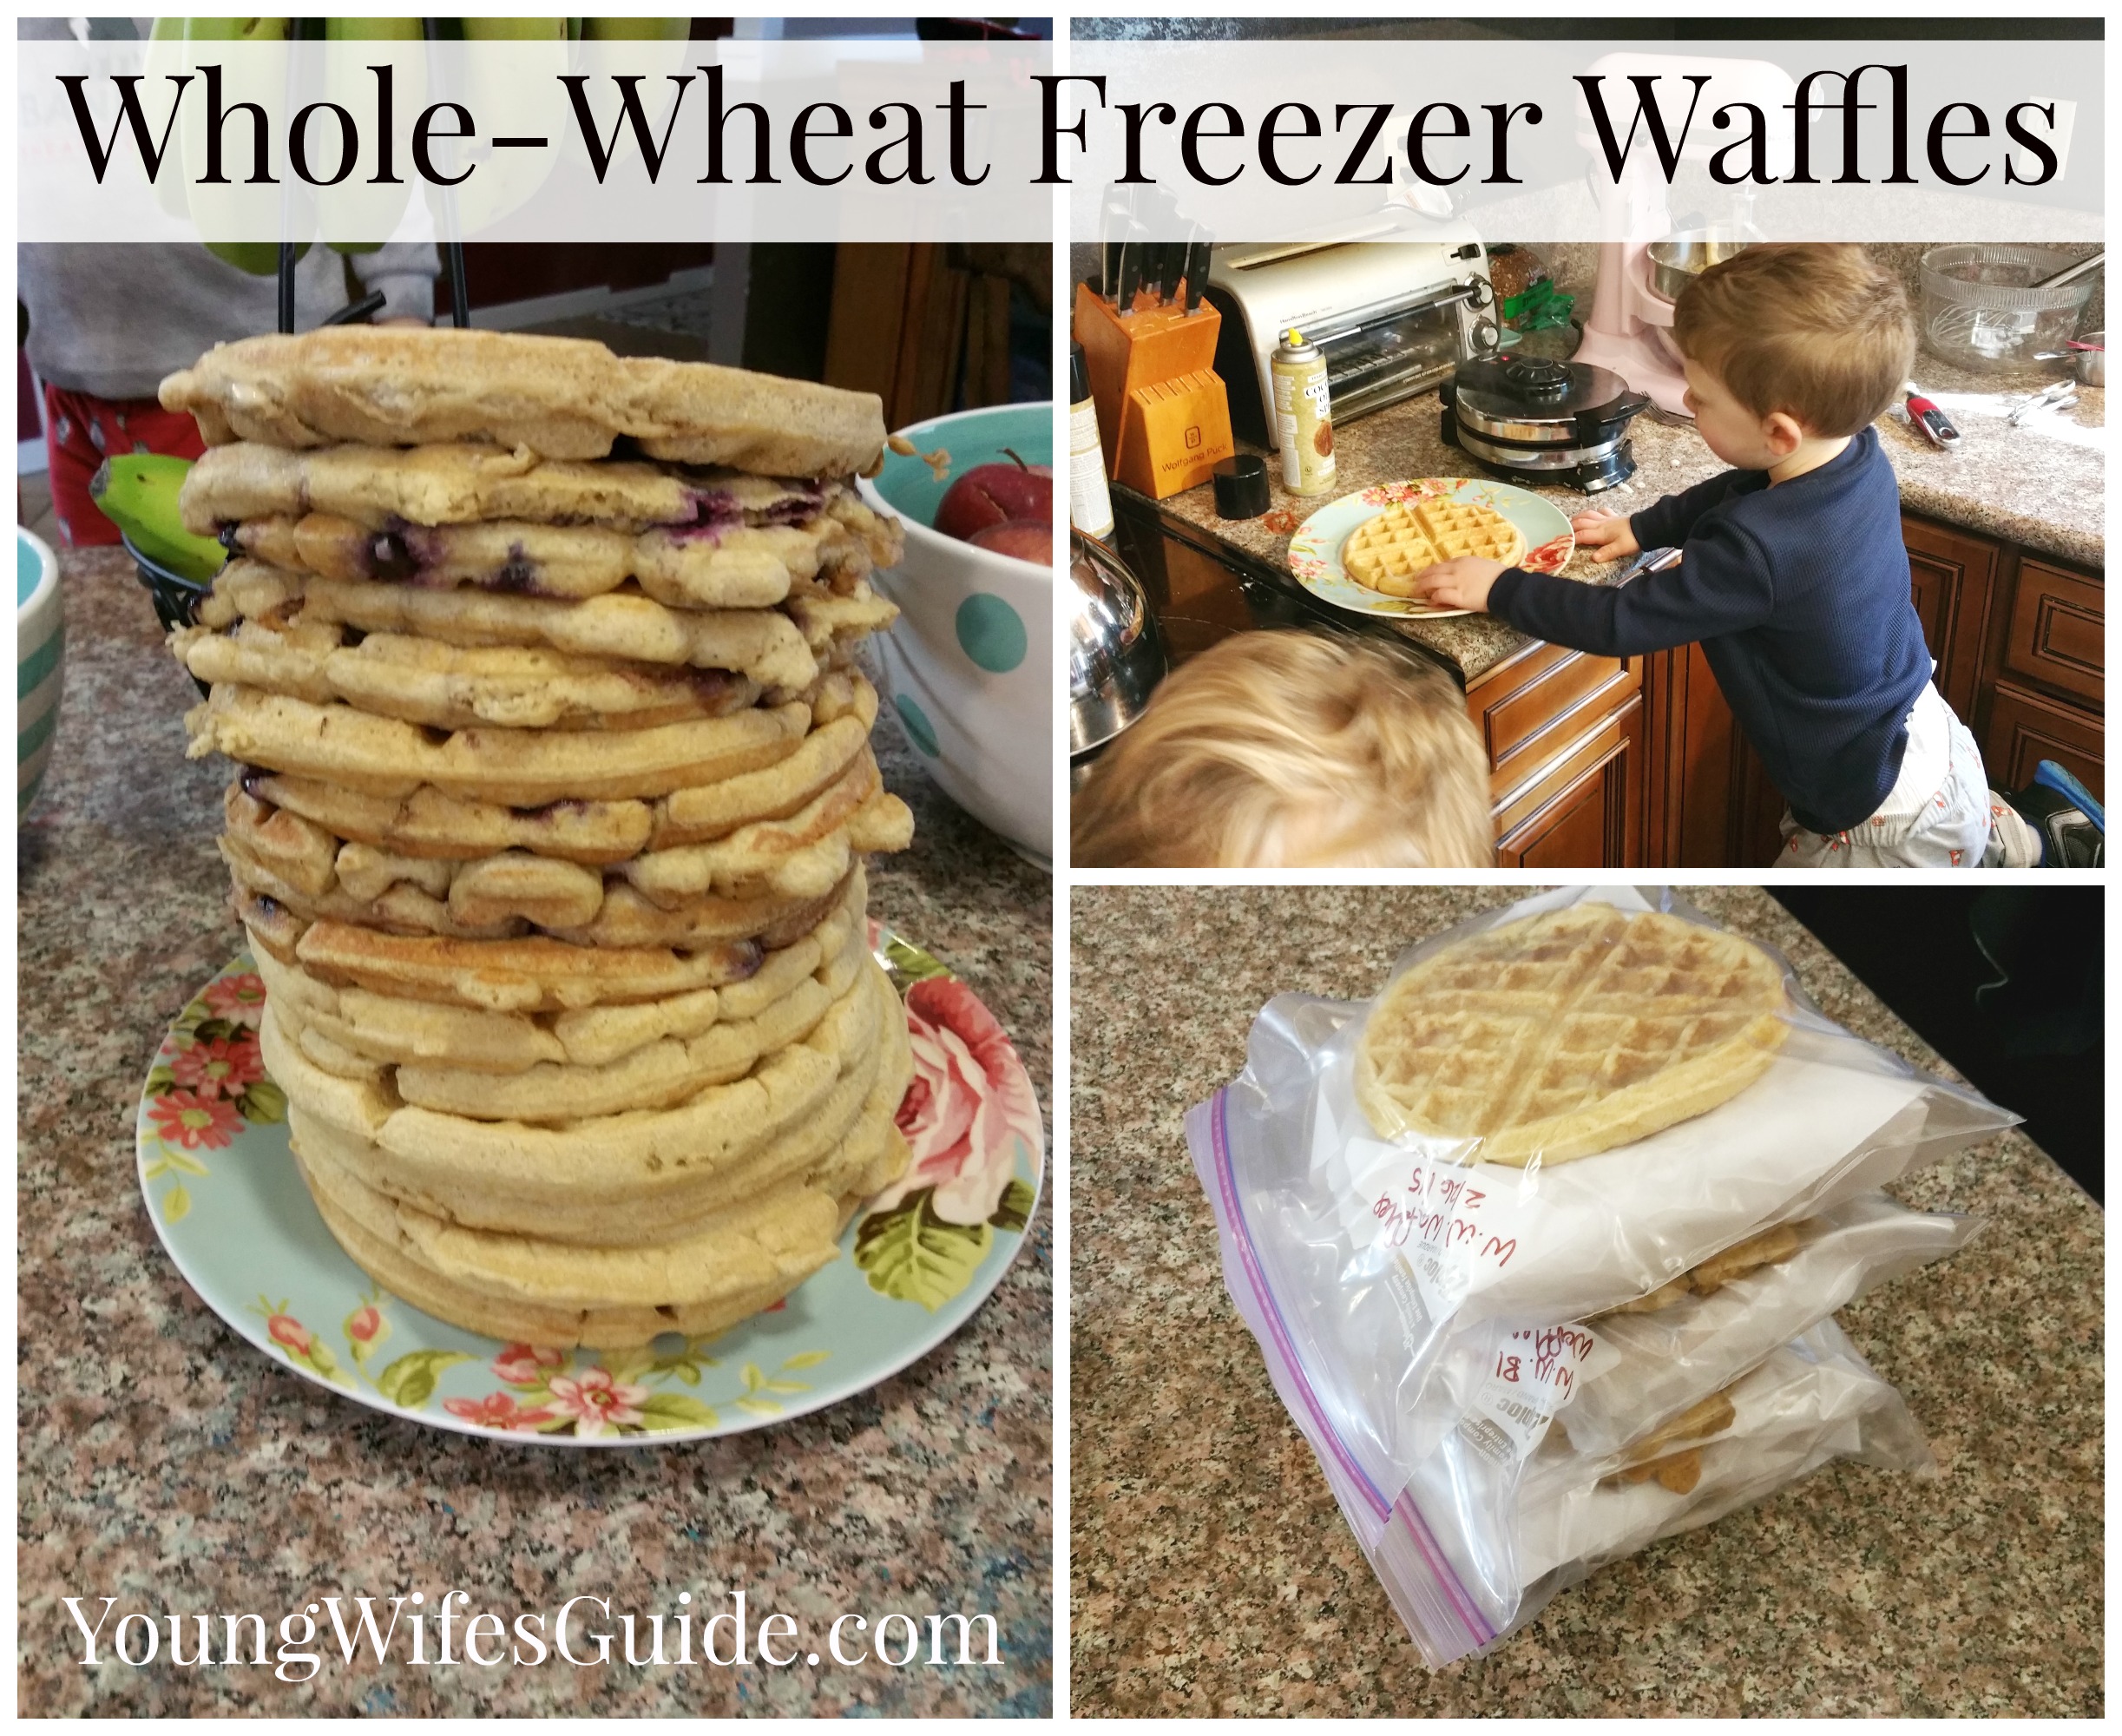 Whole wheat freezer waffles